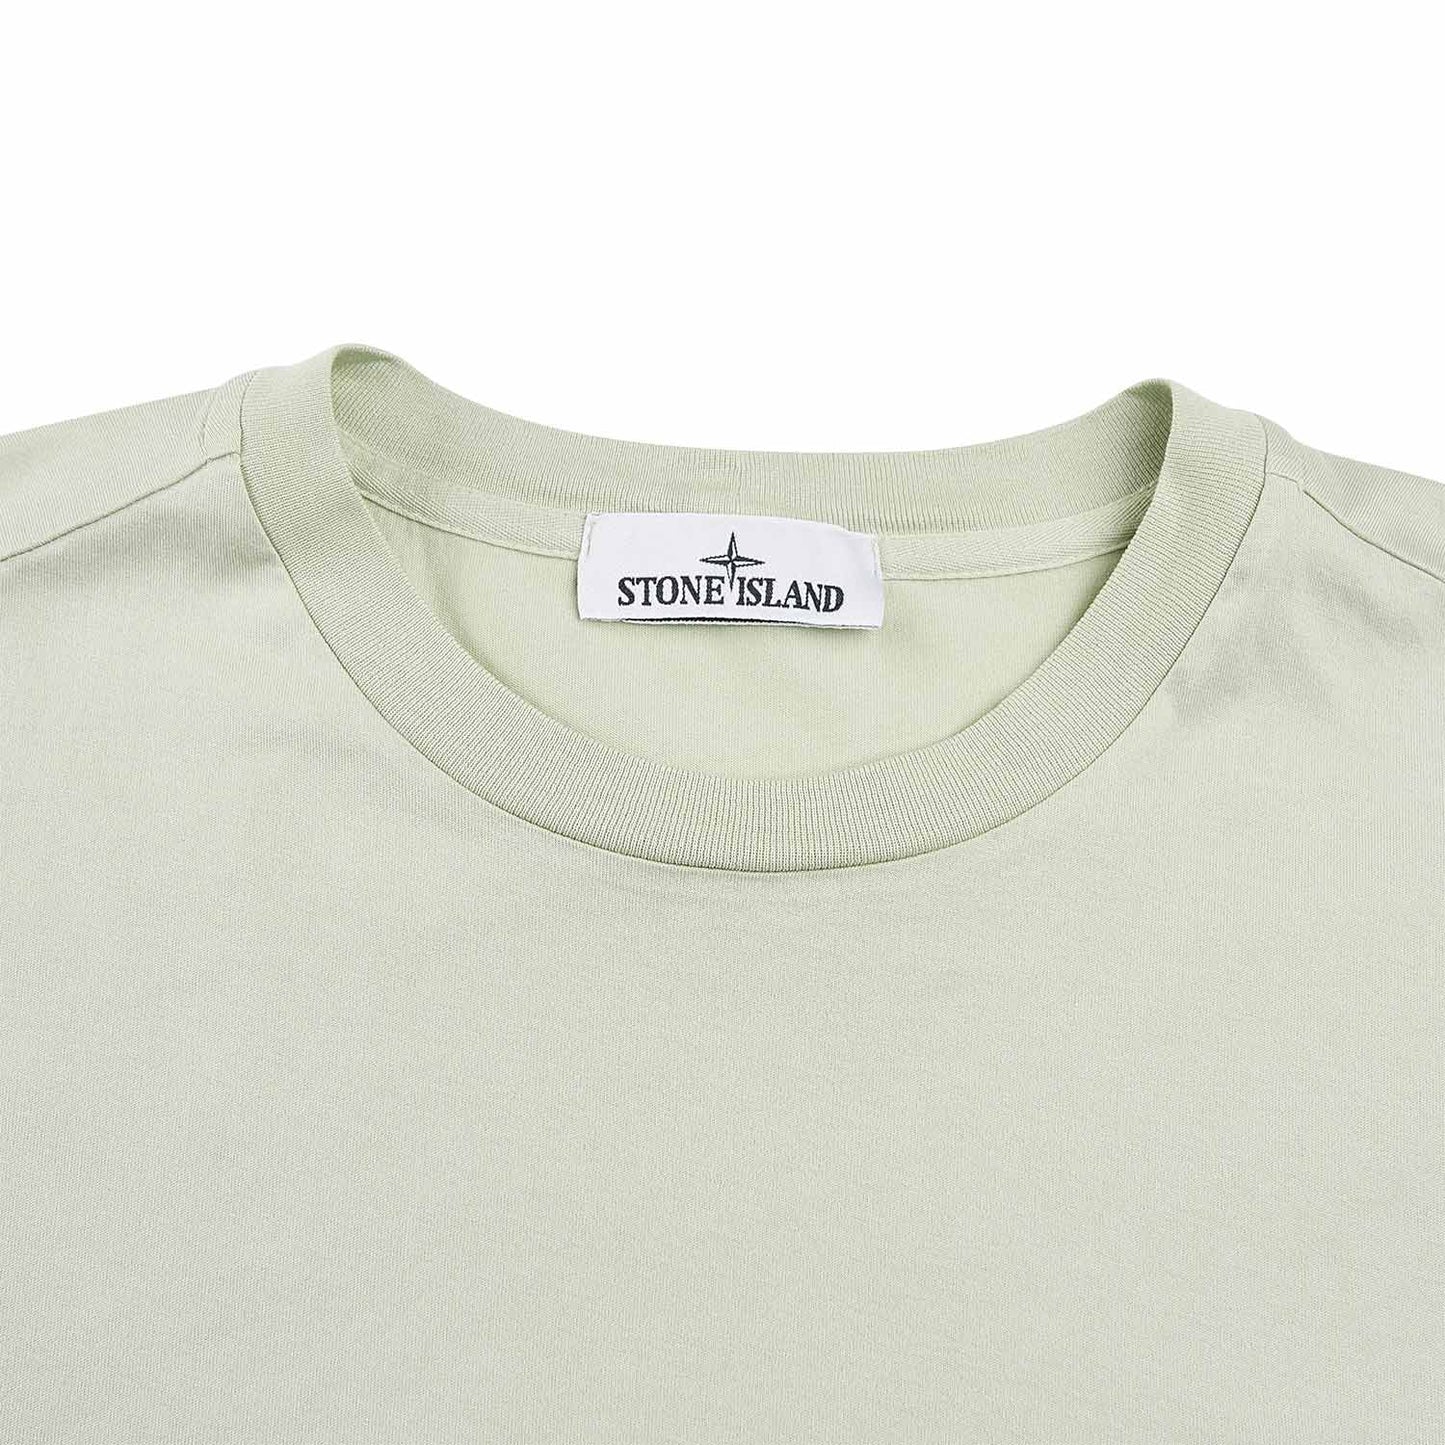 stone island t-shirt (pistachio)